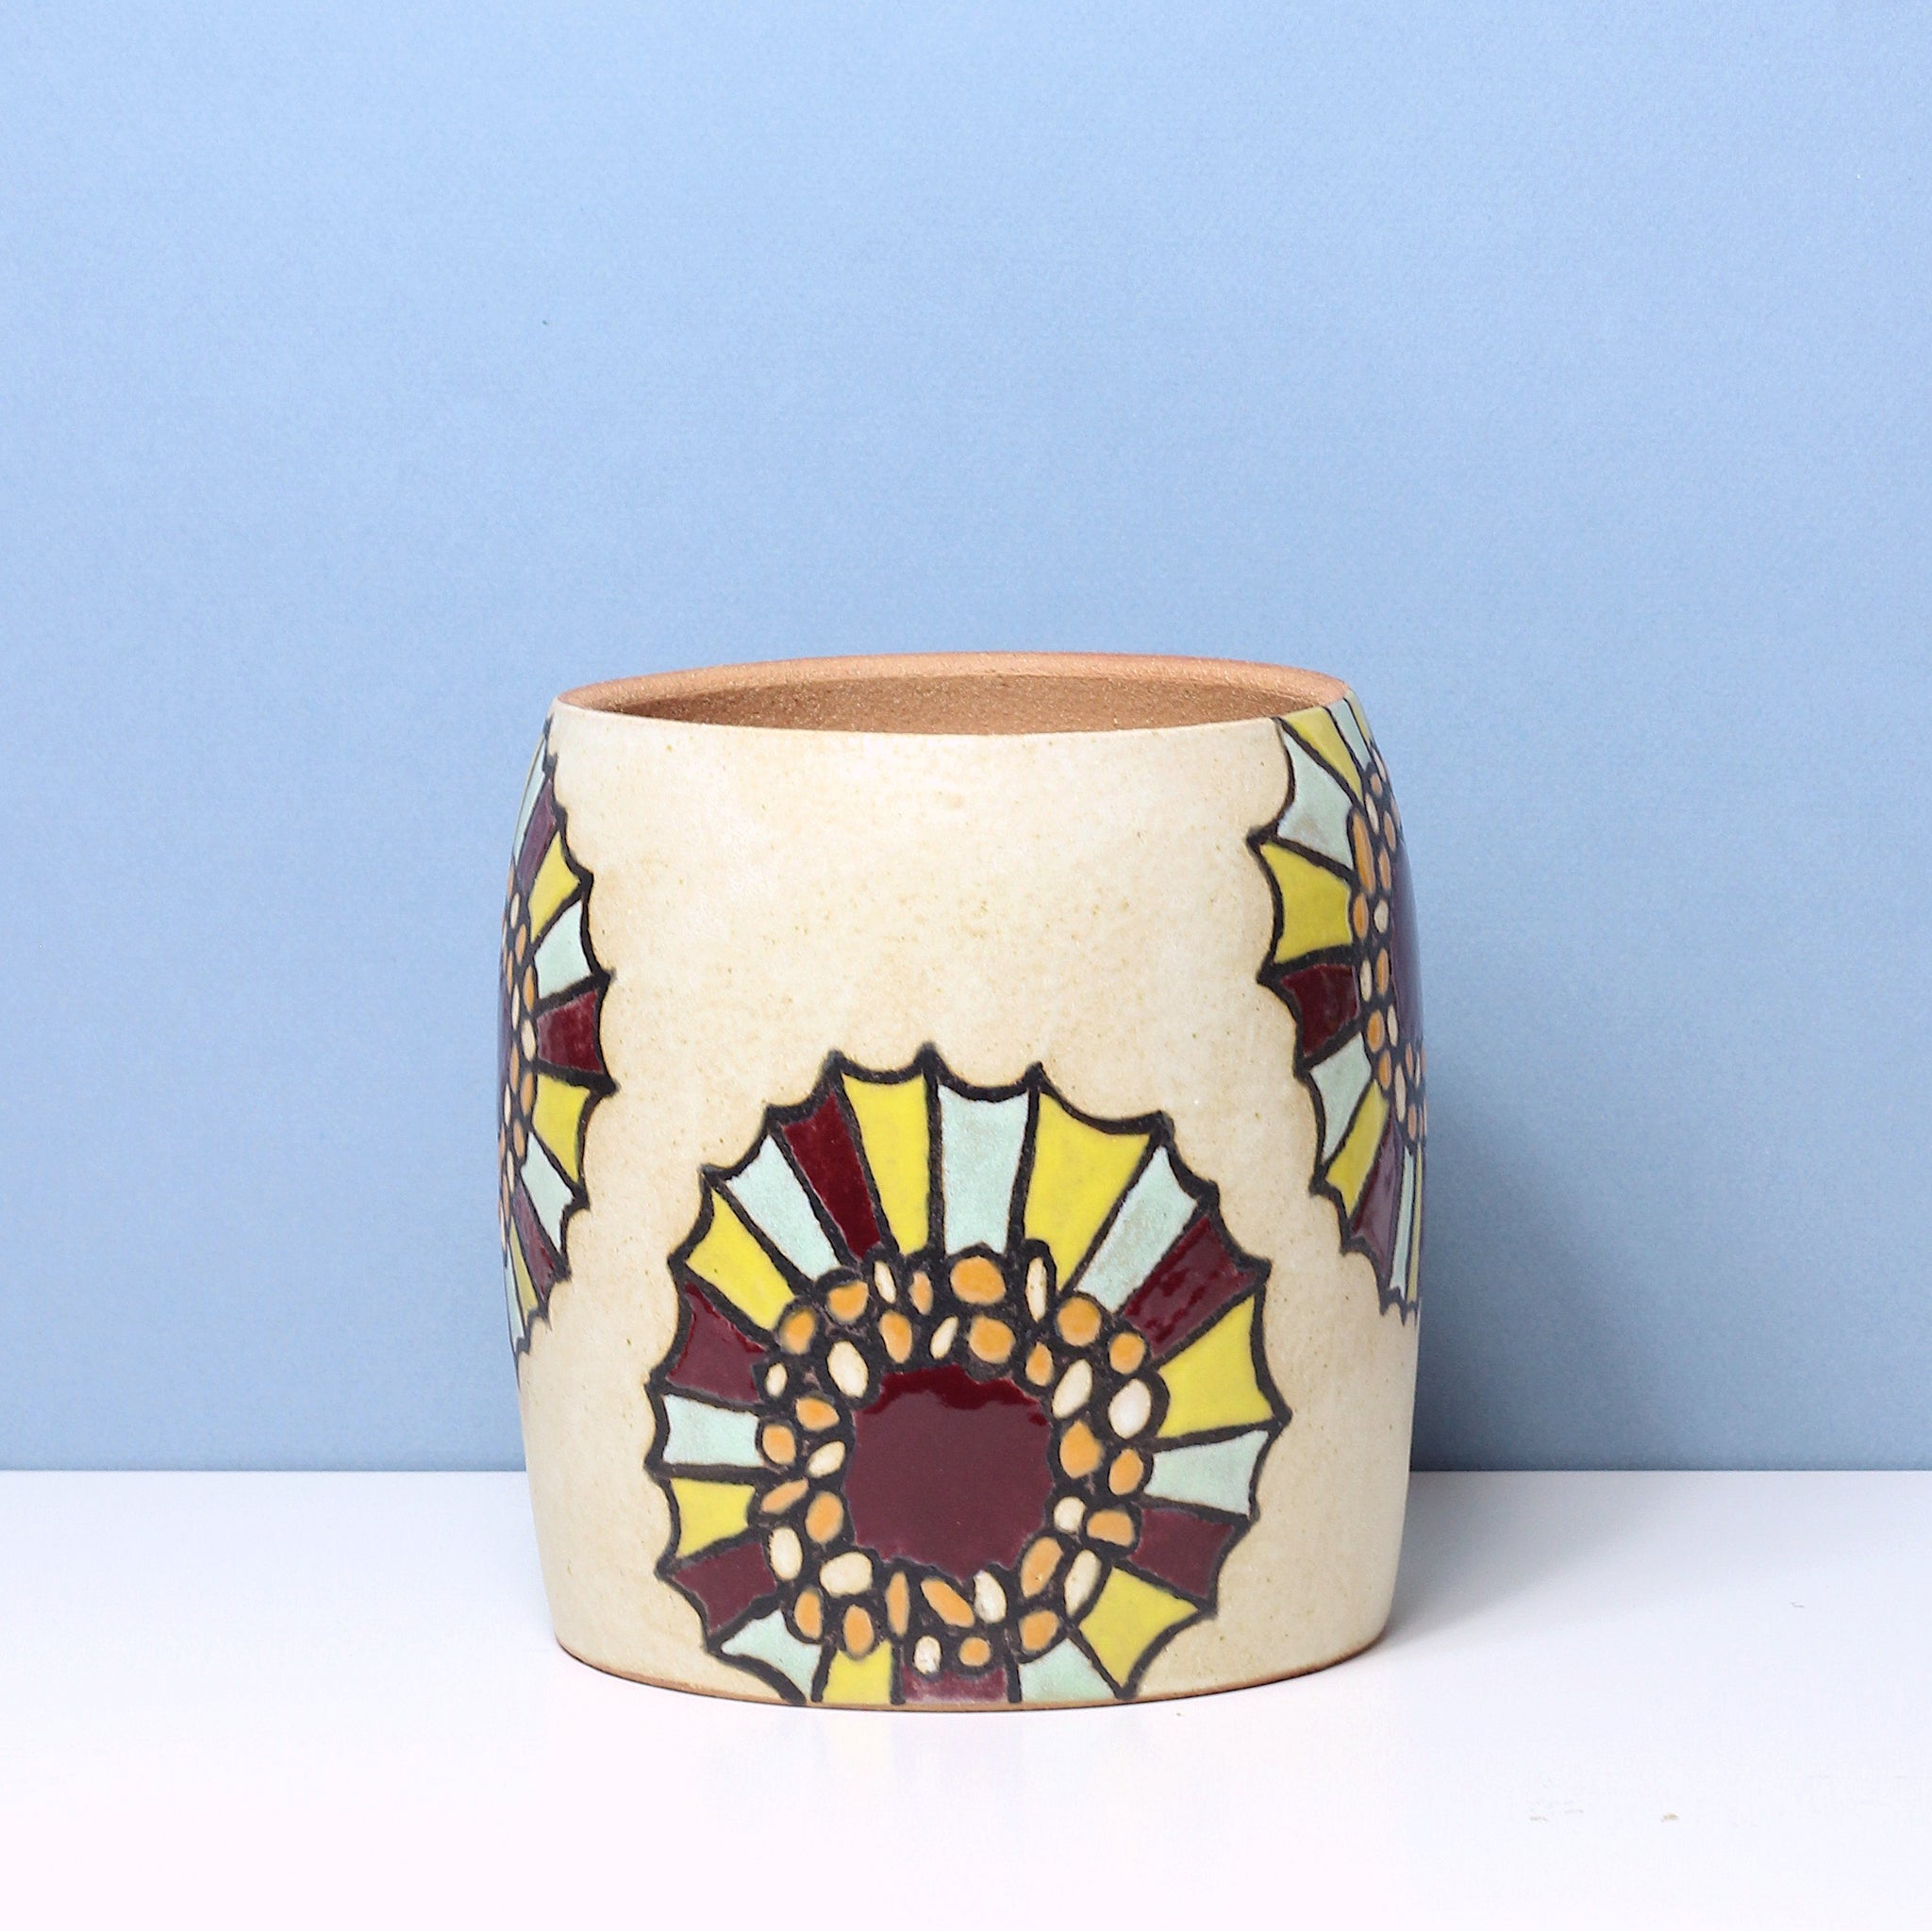 Glazed Stoneware Pot with Organic Flower Pattern